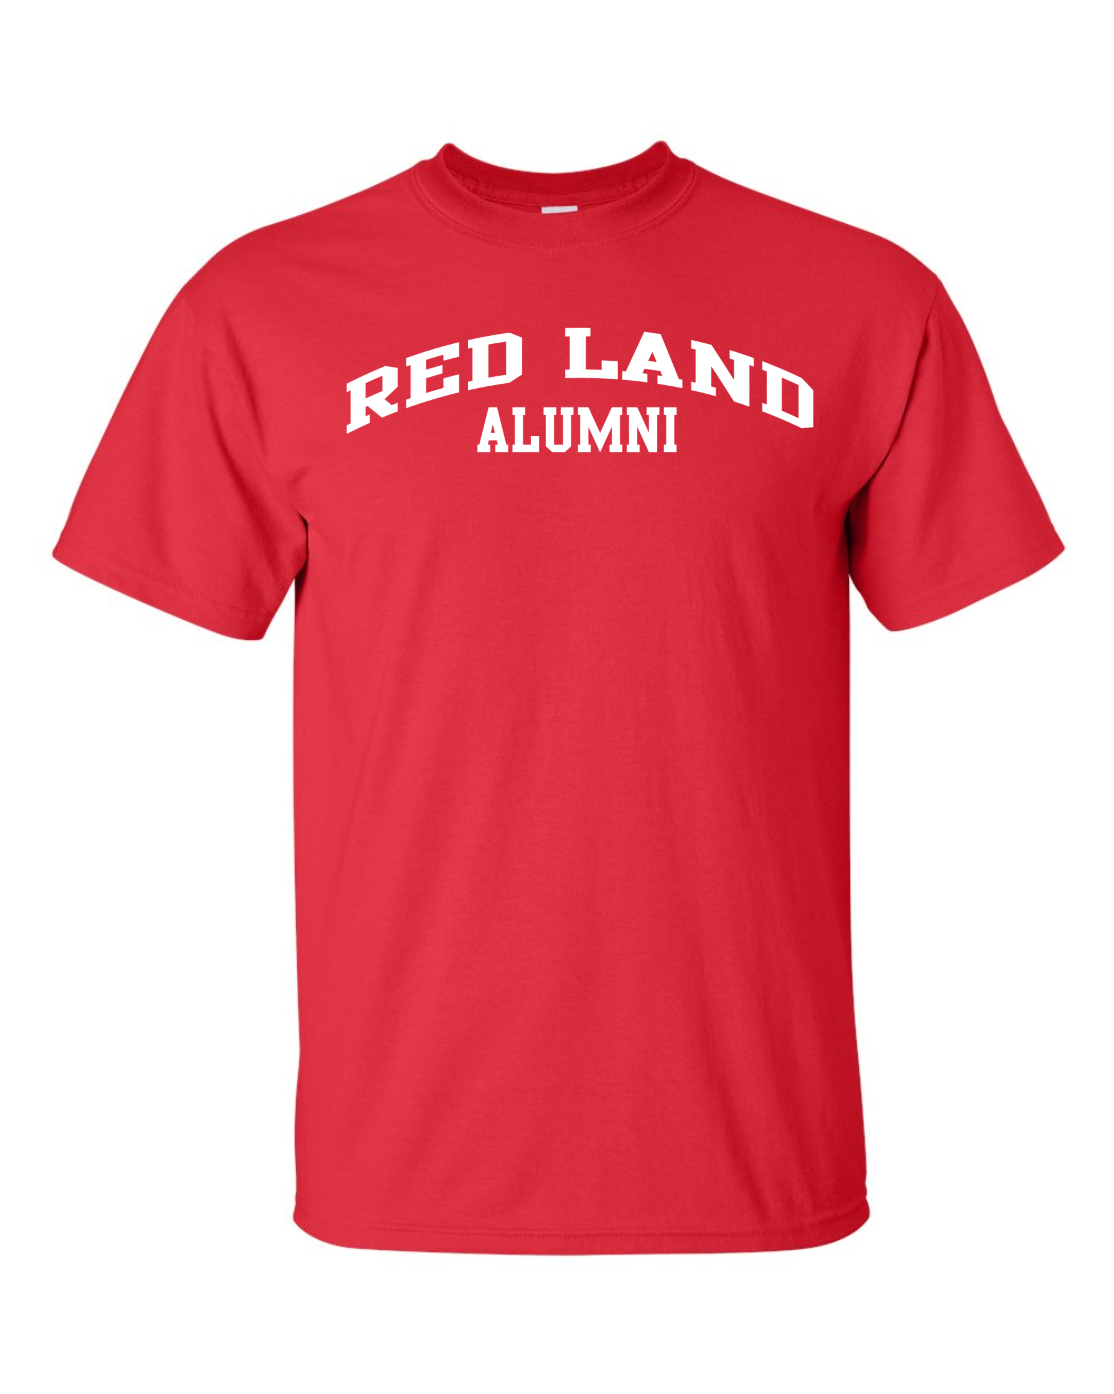 Red Land Standard Tee - ALUMNI